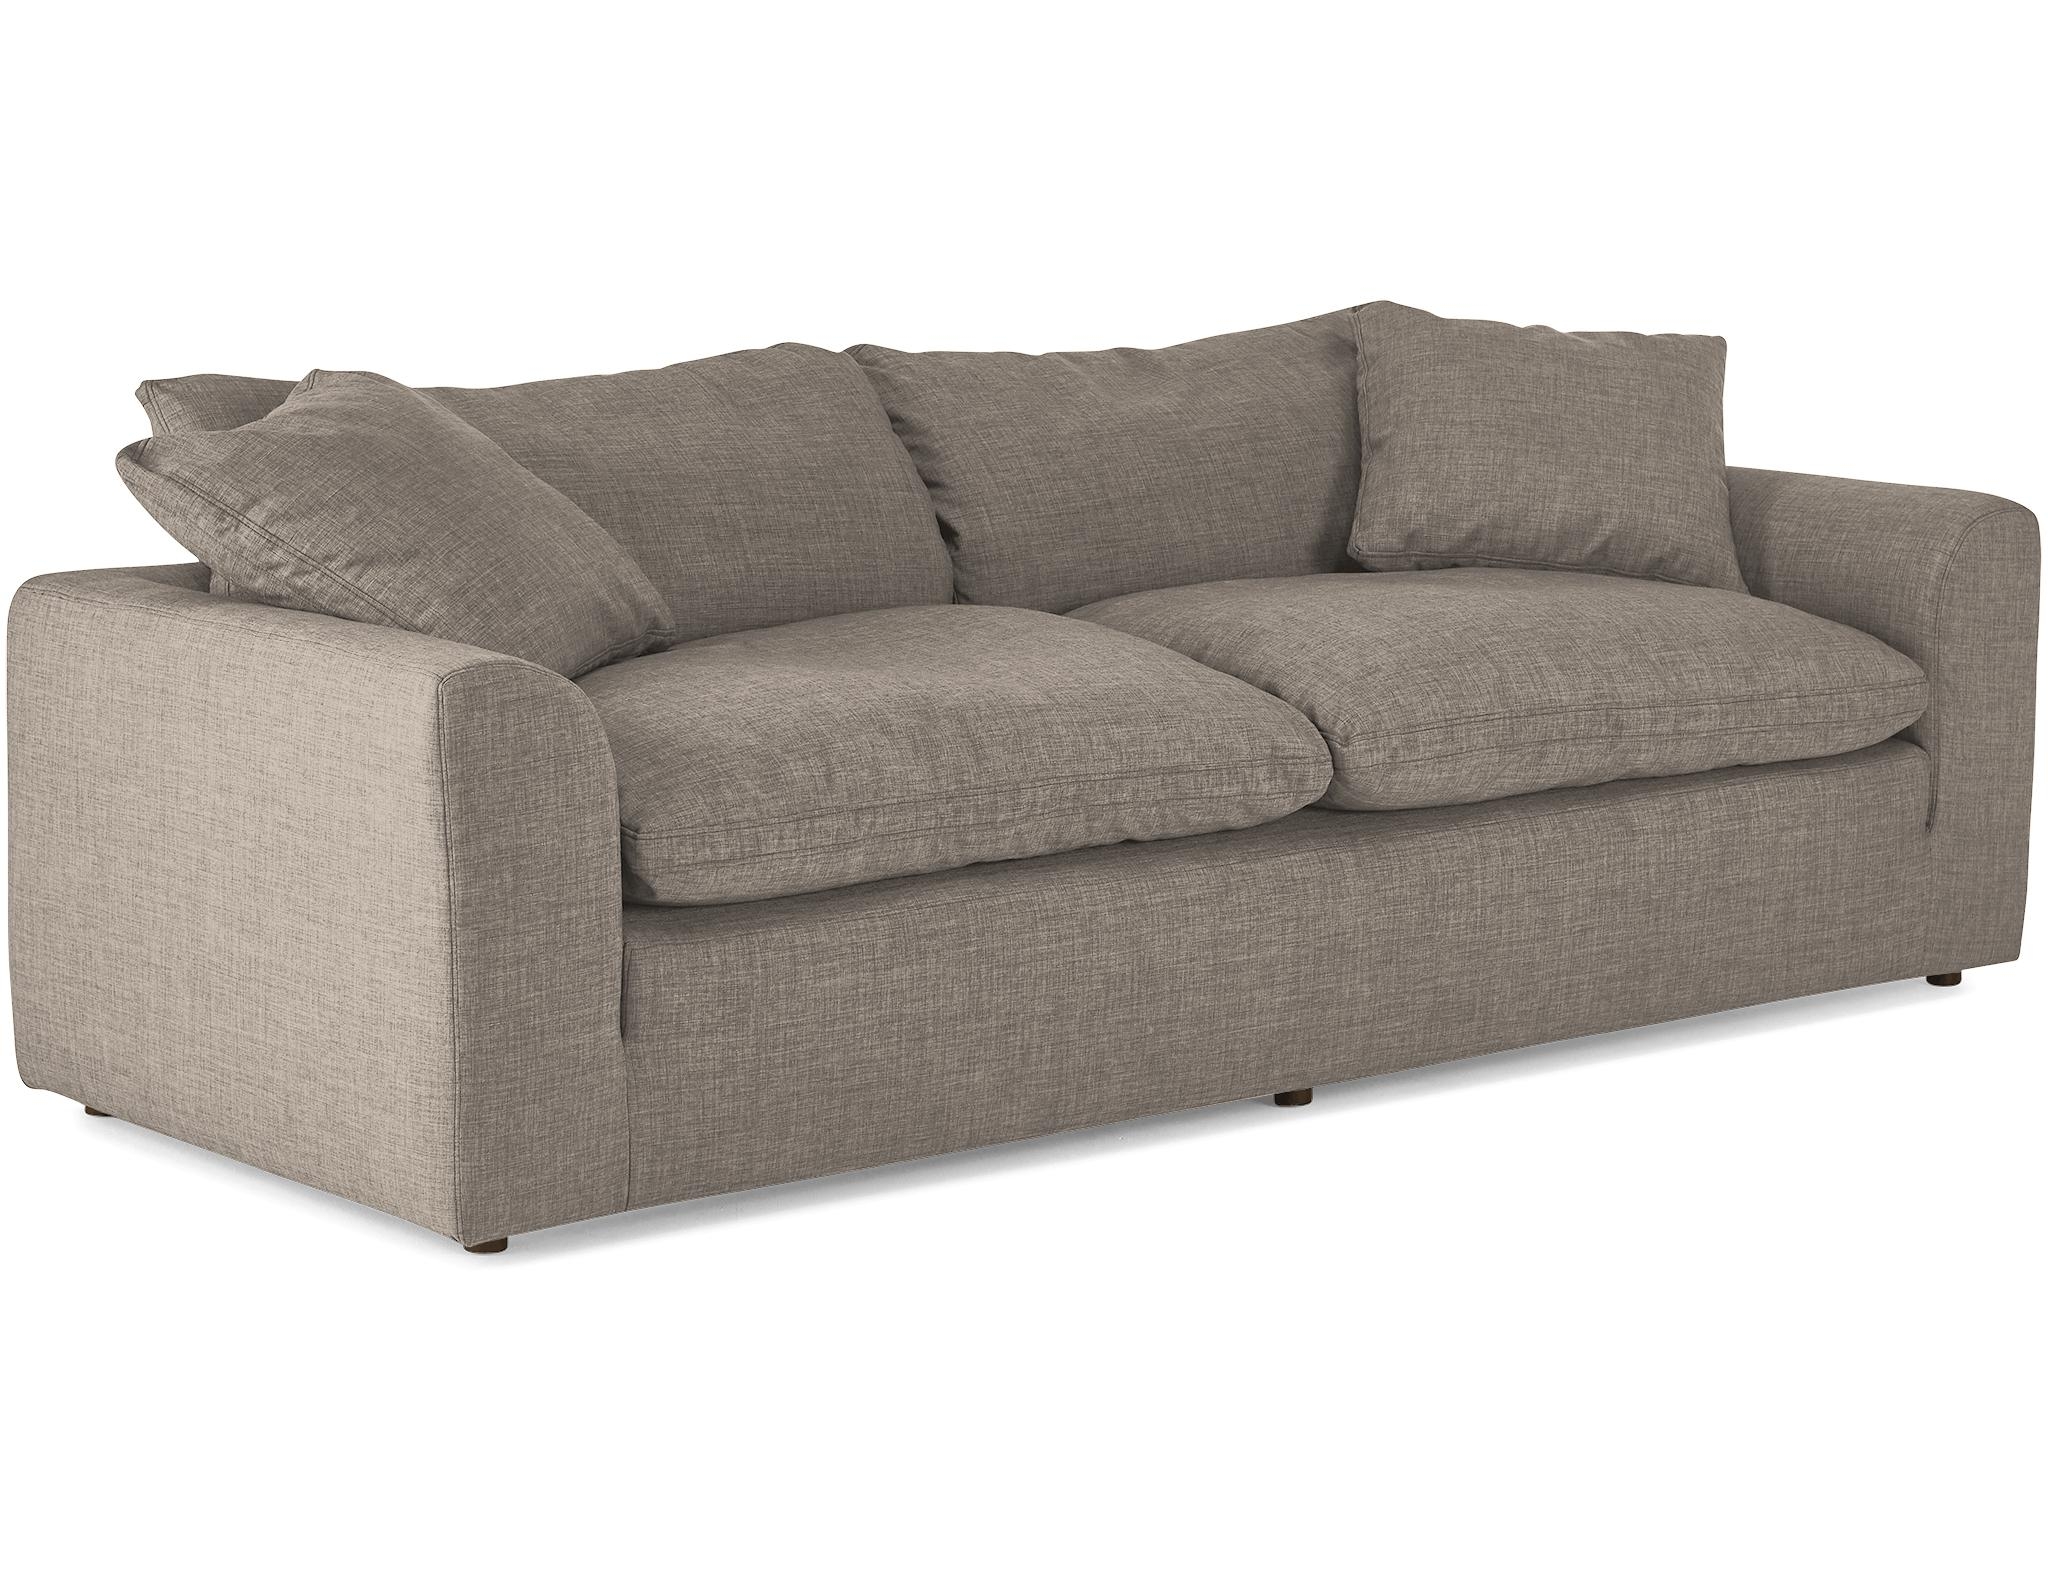 Gray Bryant Mid Century Modern Sofa - Prime Stone - Image 1